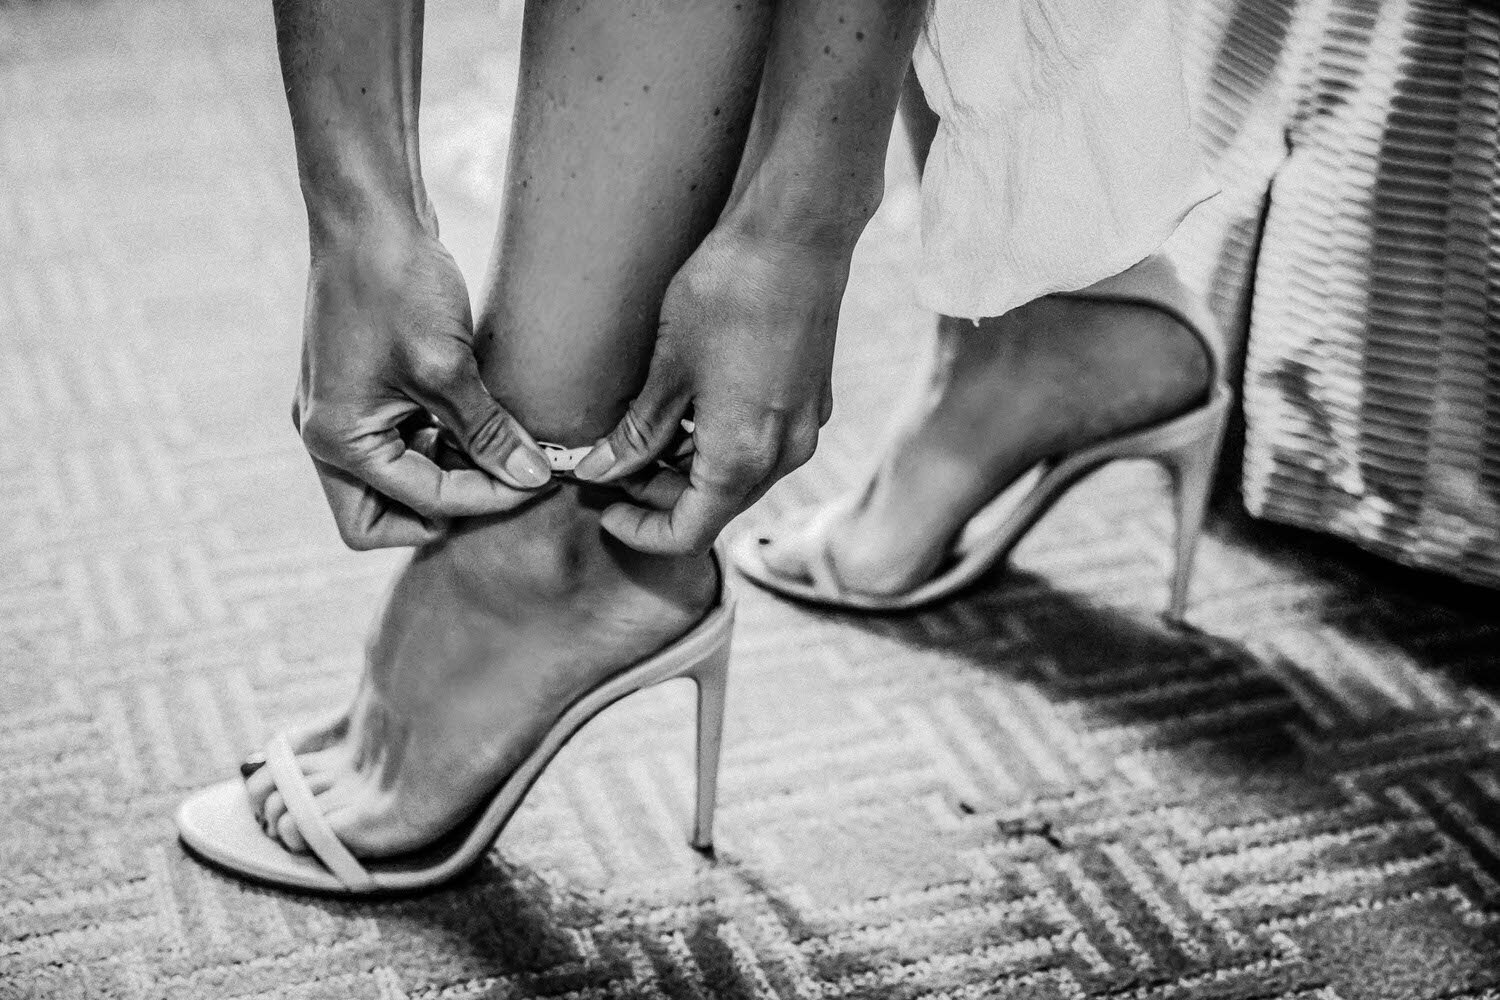 nyc long island wedding photography modern bride shoes deails 23.jpg